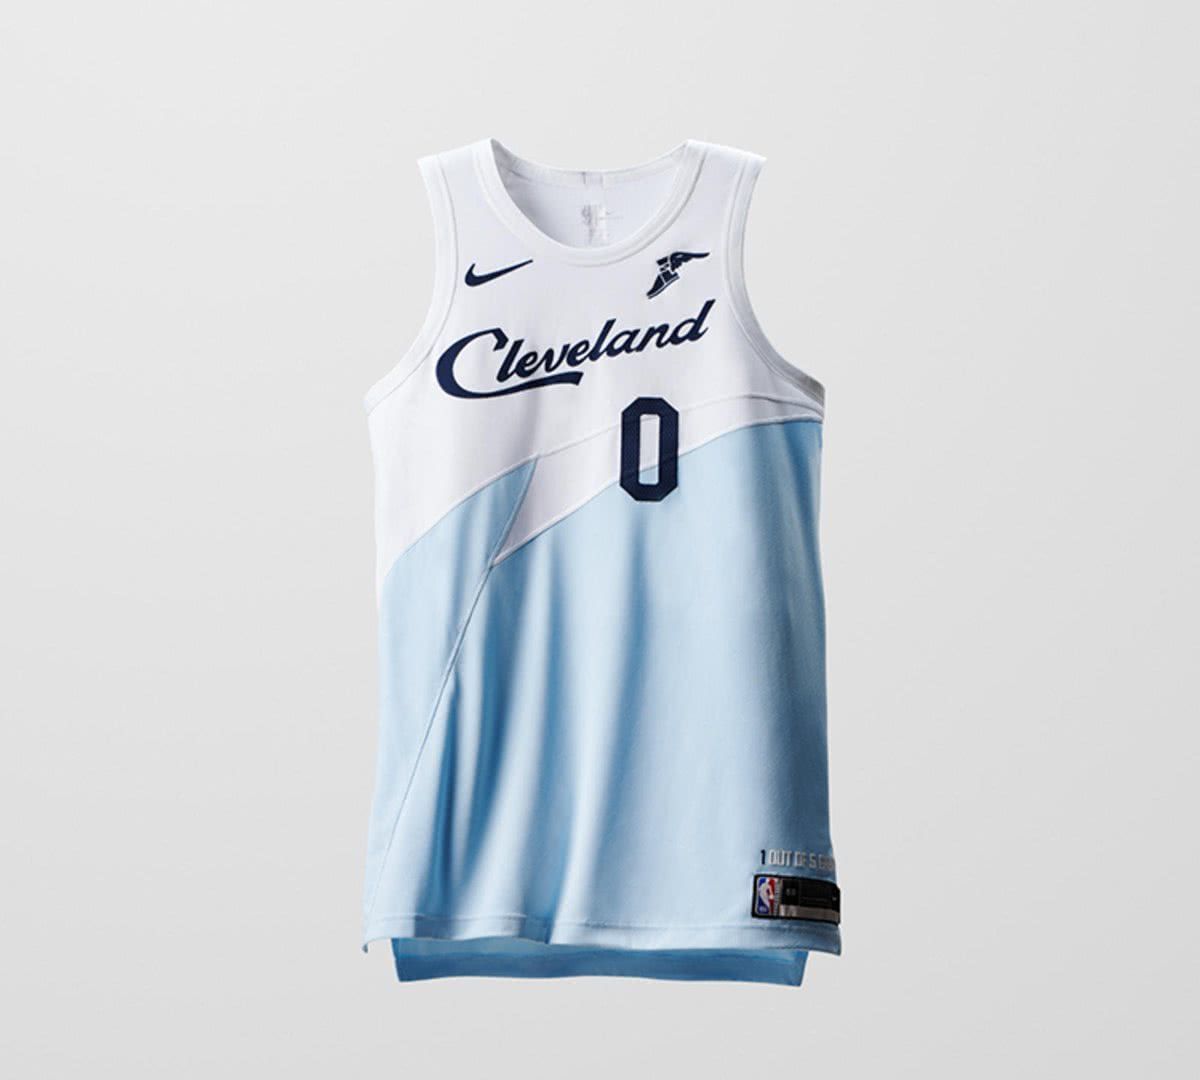 Nike官方发布NBA季后赛Earned版本球衣